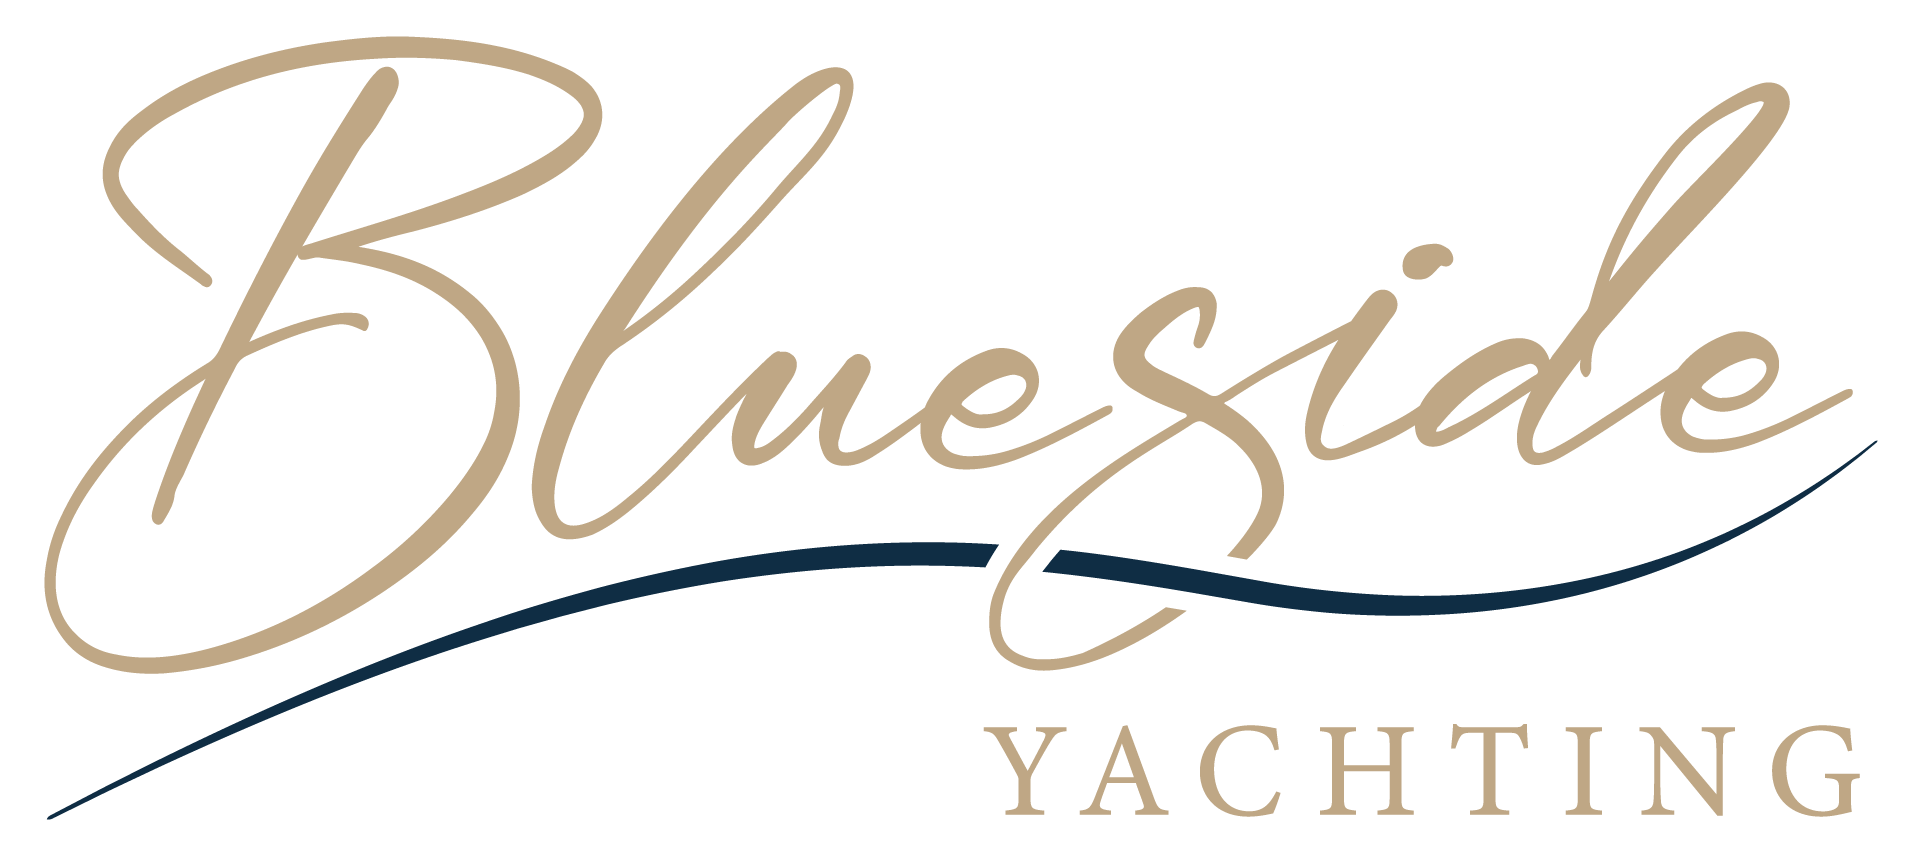 blueside yachting gold